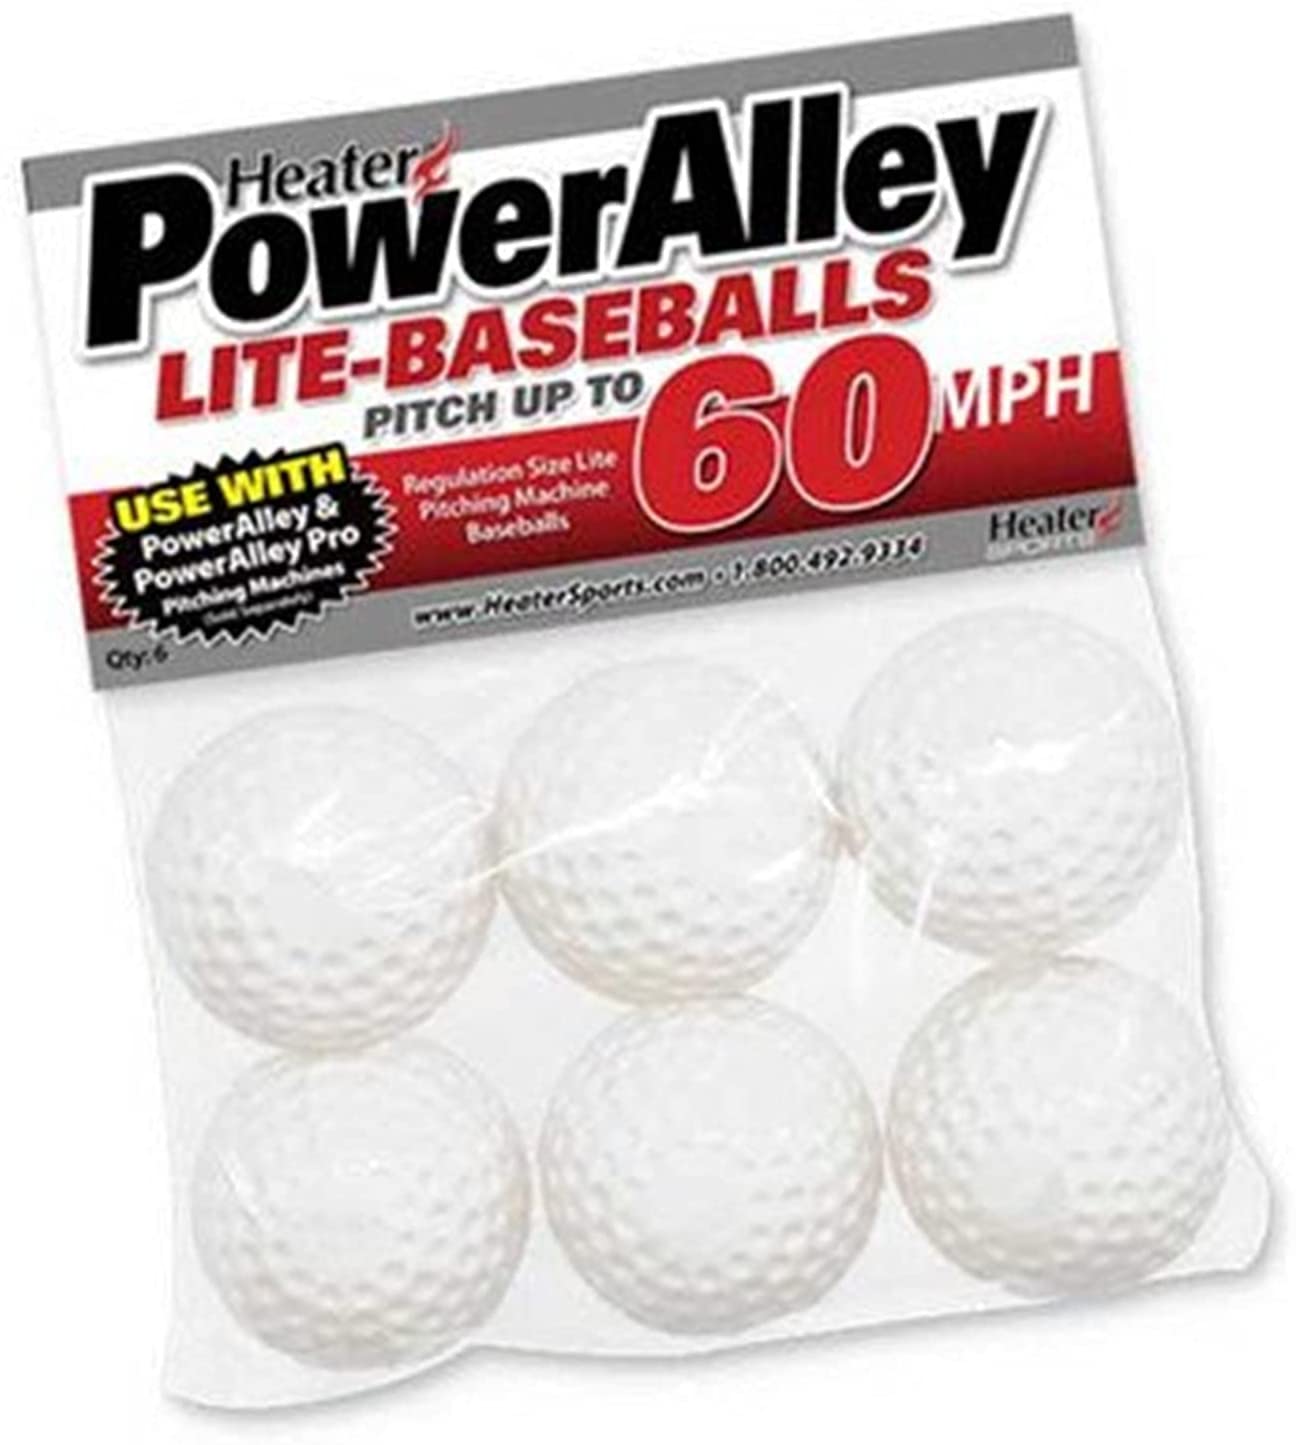 Heater Sports PowerAlley 60 MPH White Lite Baseballs (6 Pack) - Pro-Distributing